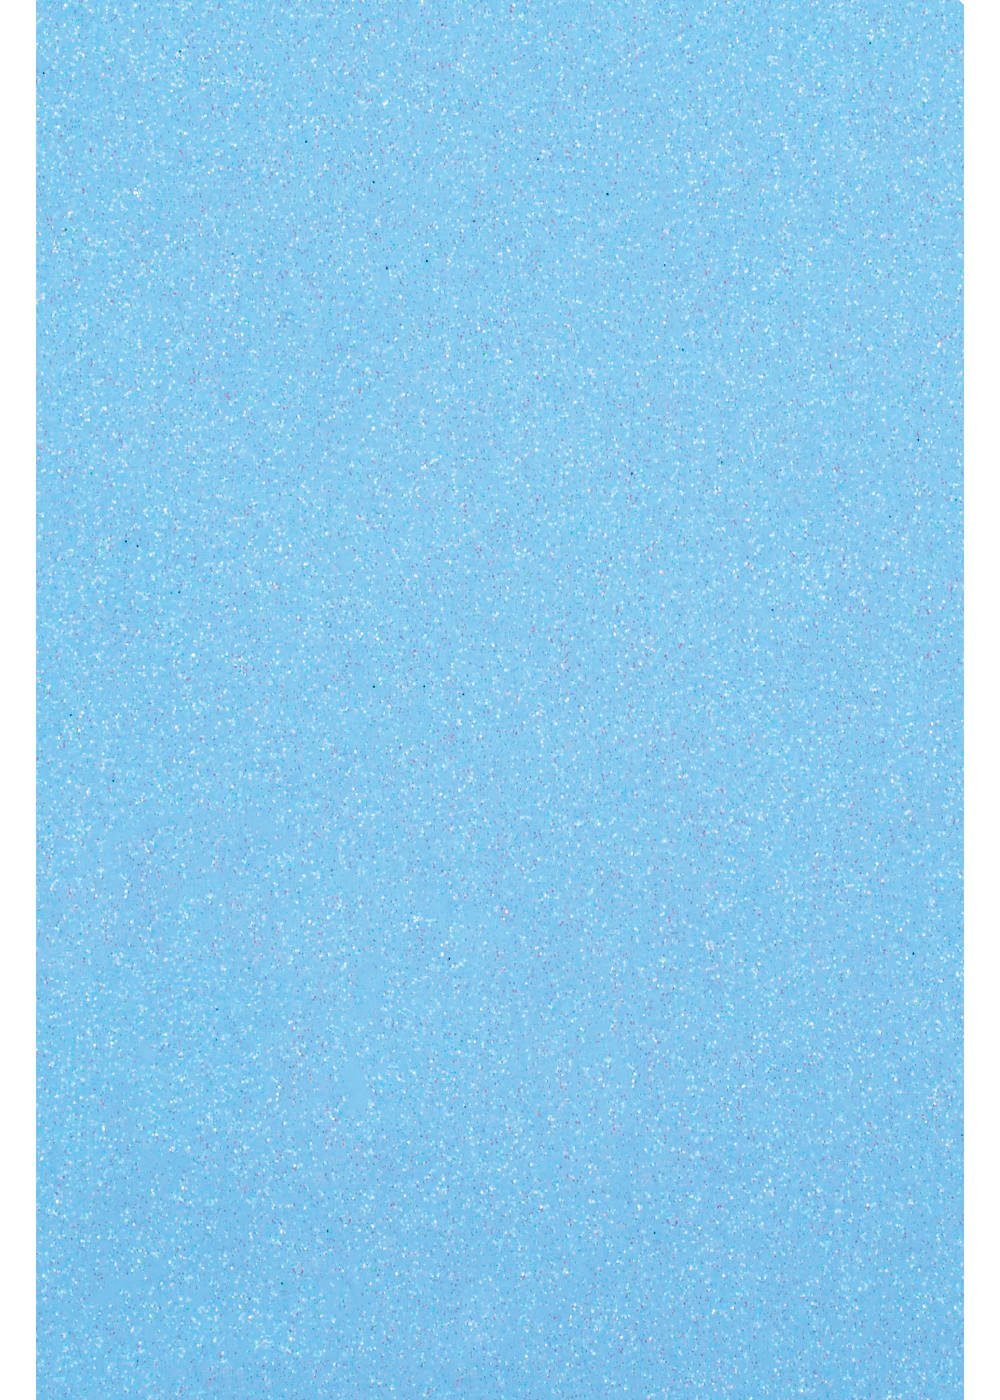 Hilltop Transparentpapier Glitzer Transferfolie/Textilfolie perfekt Plottern zum zum Blue Aufbügeln, Neon